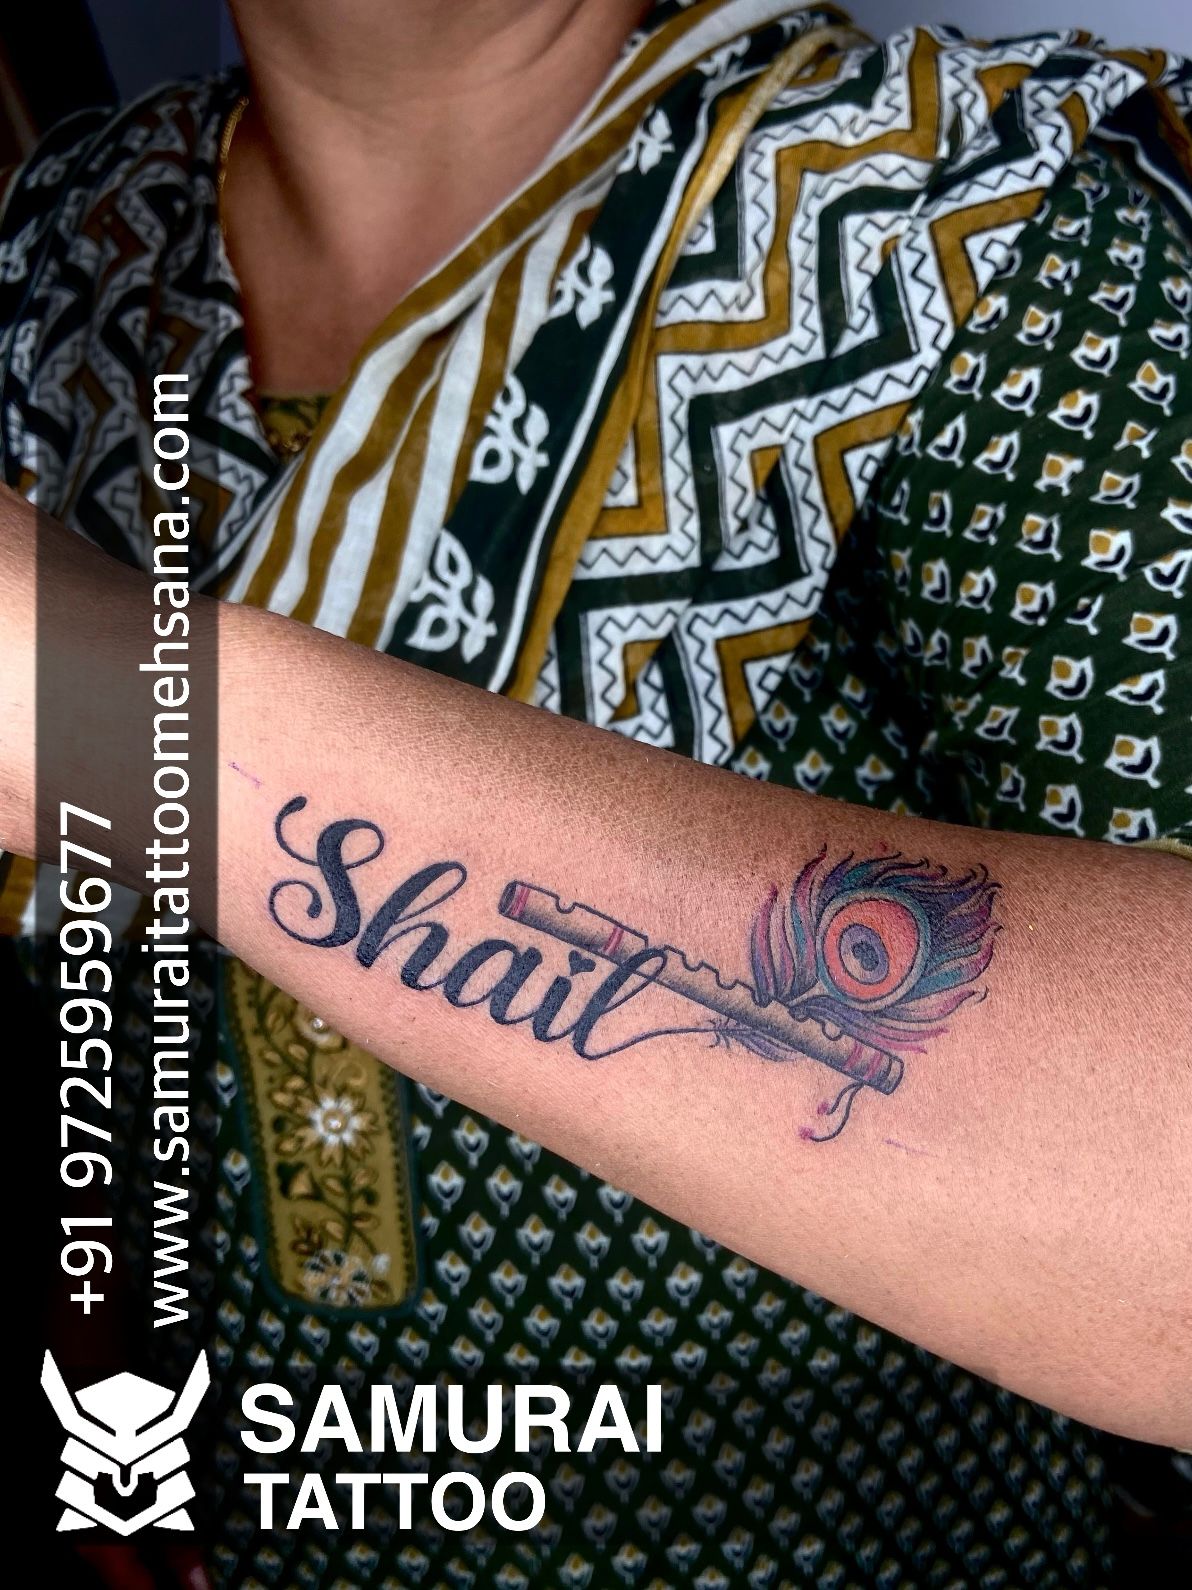 Kush Thakur tattoos added a new photo. - Kush Thakur tattoos